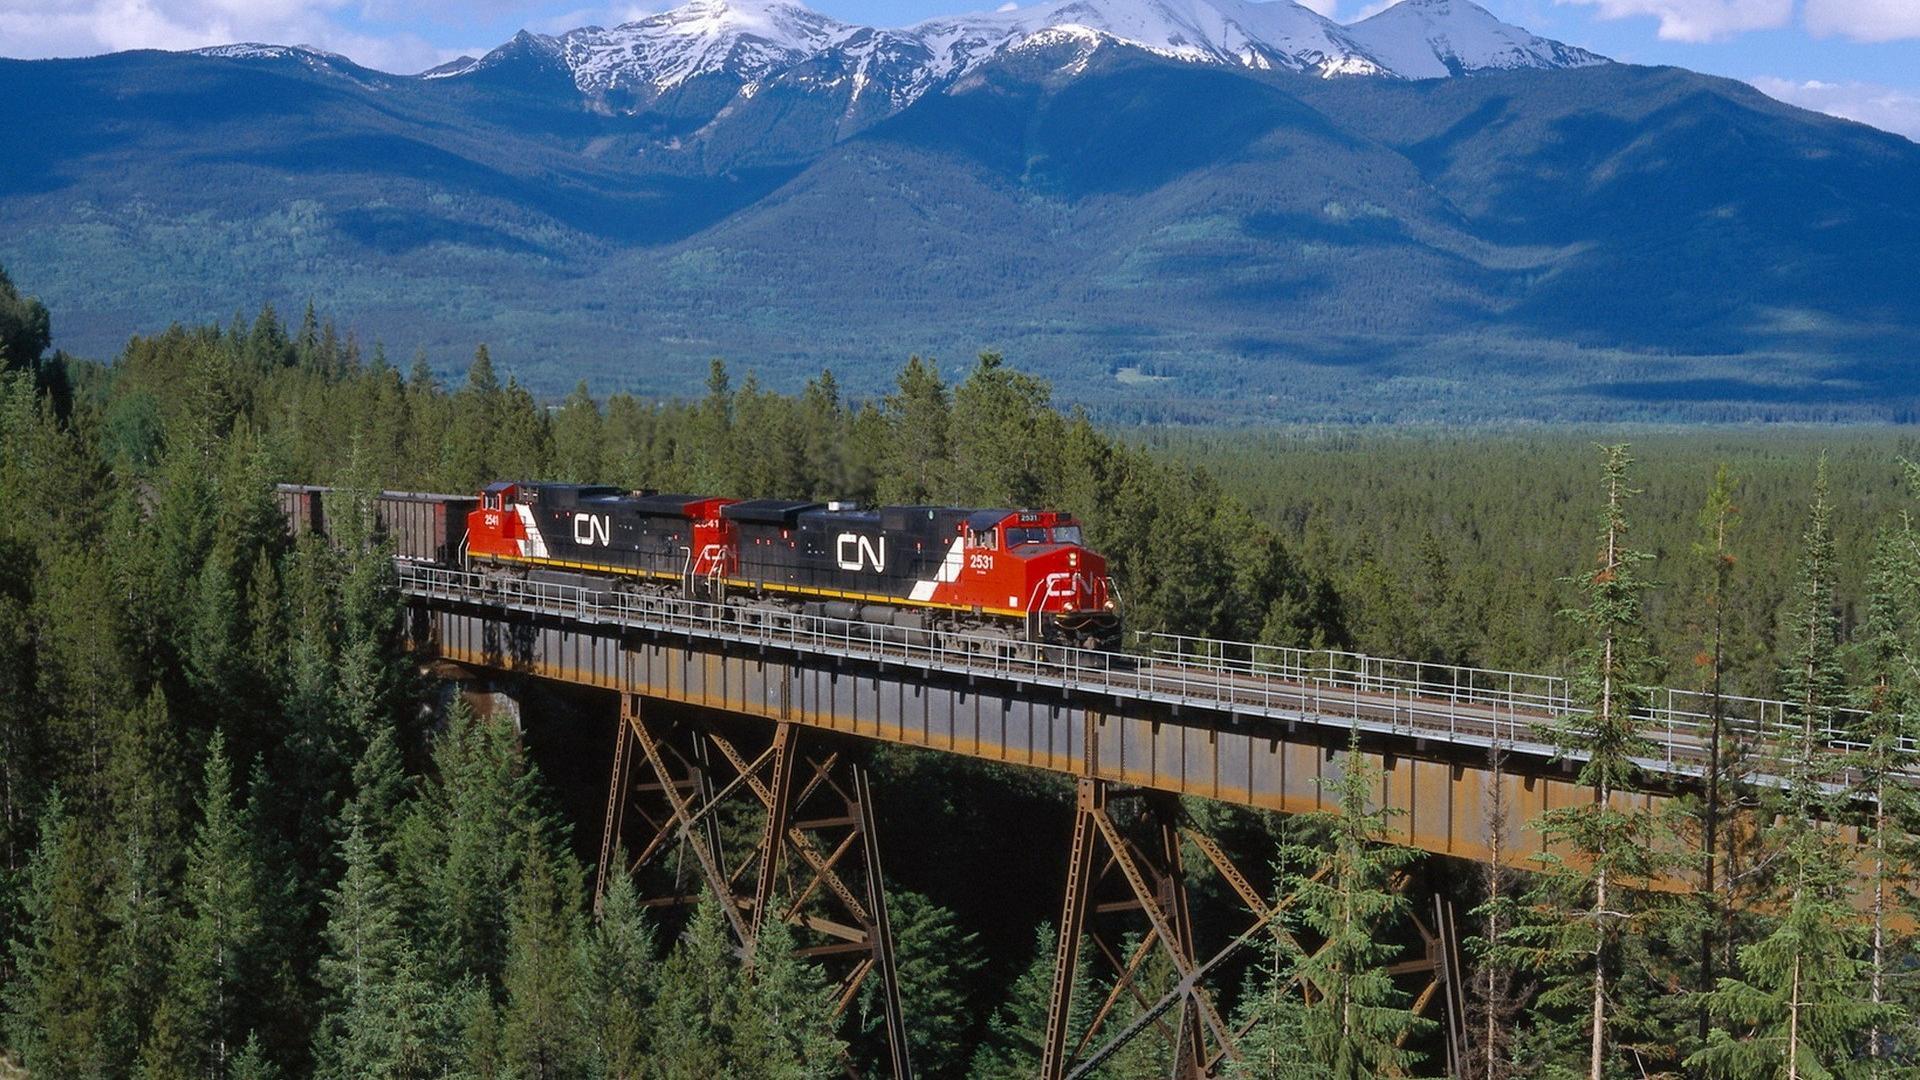 Train In Snowy Mountains - Trains Wallpaper